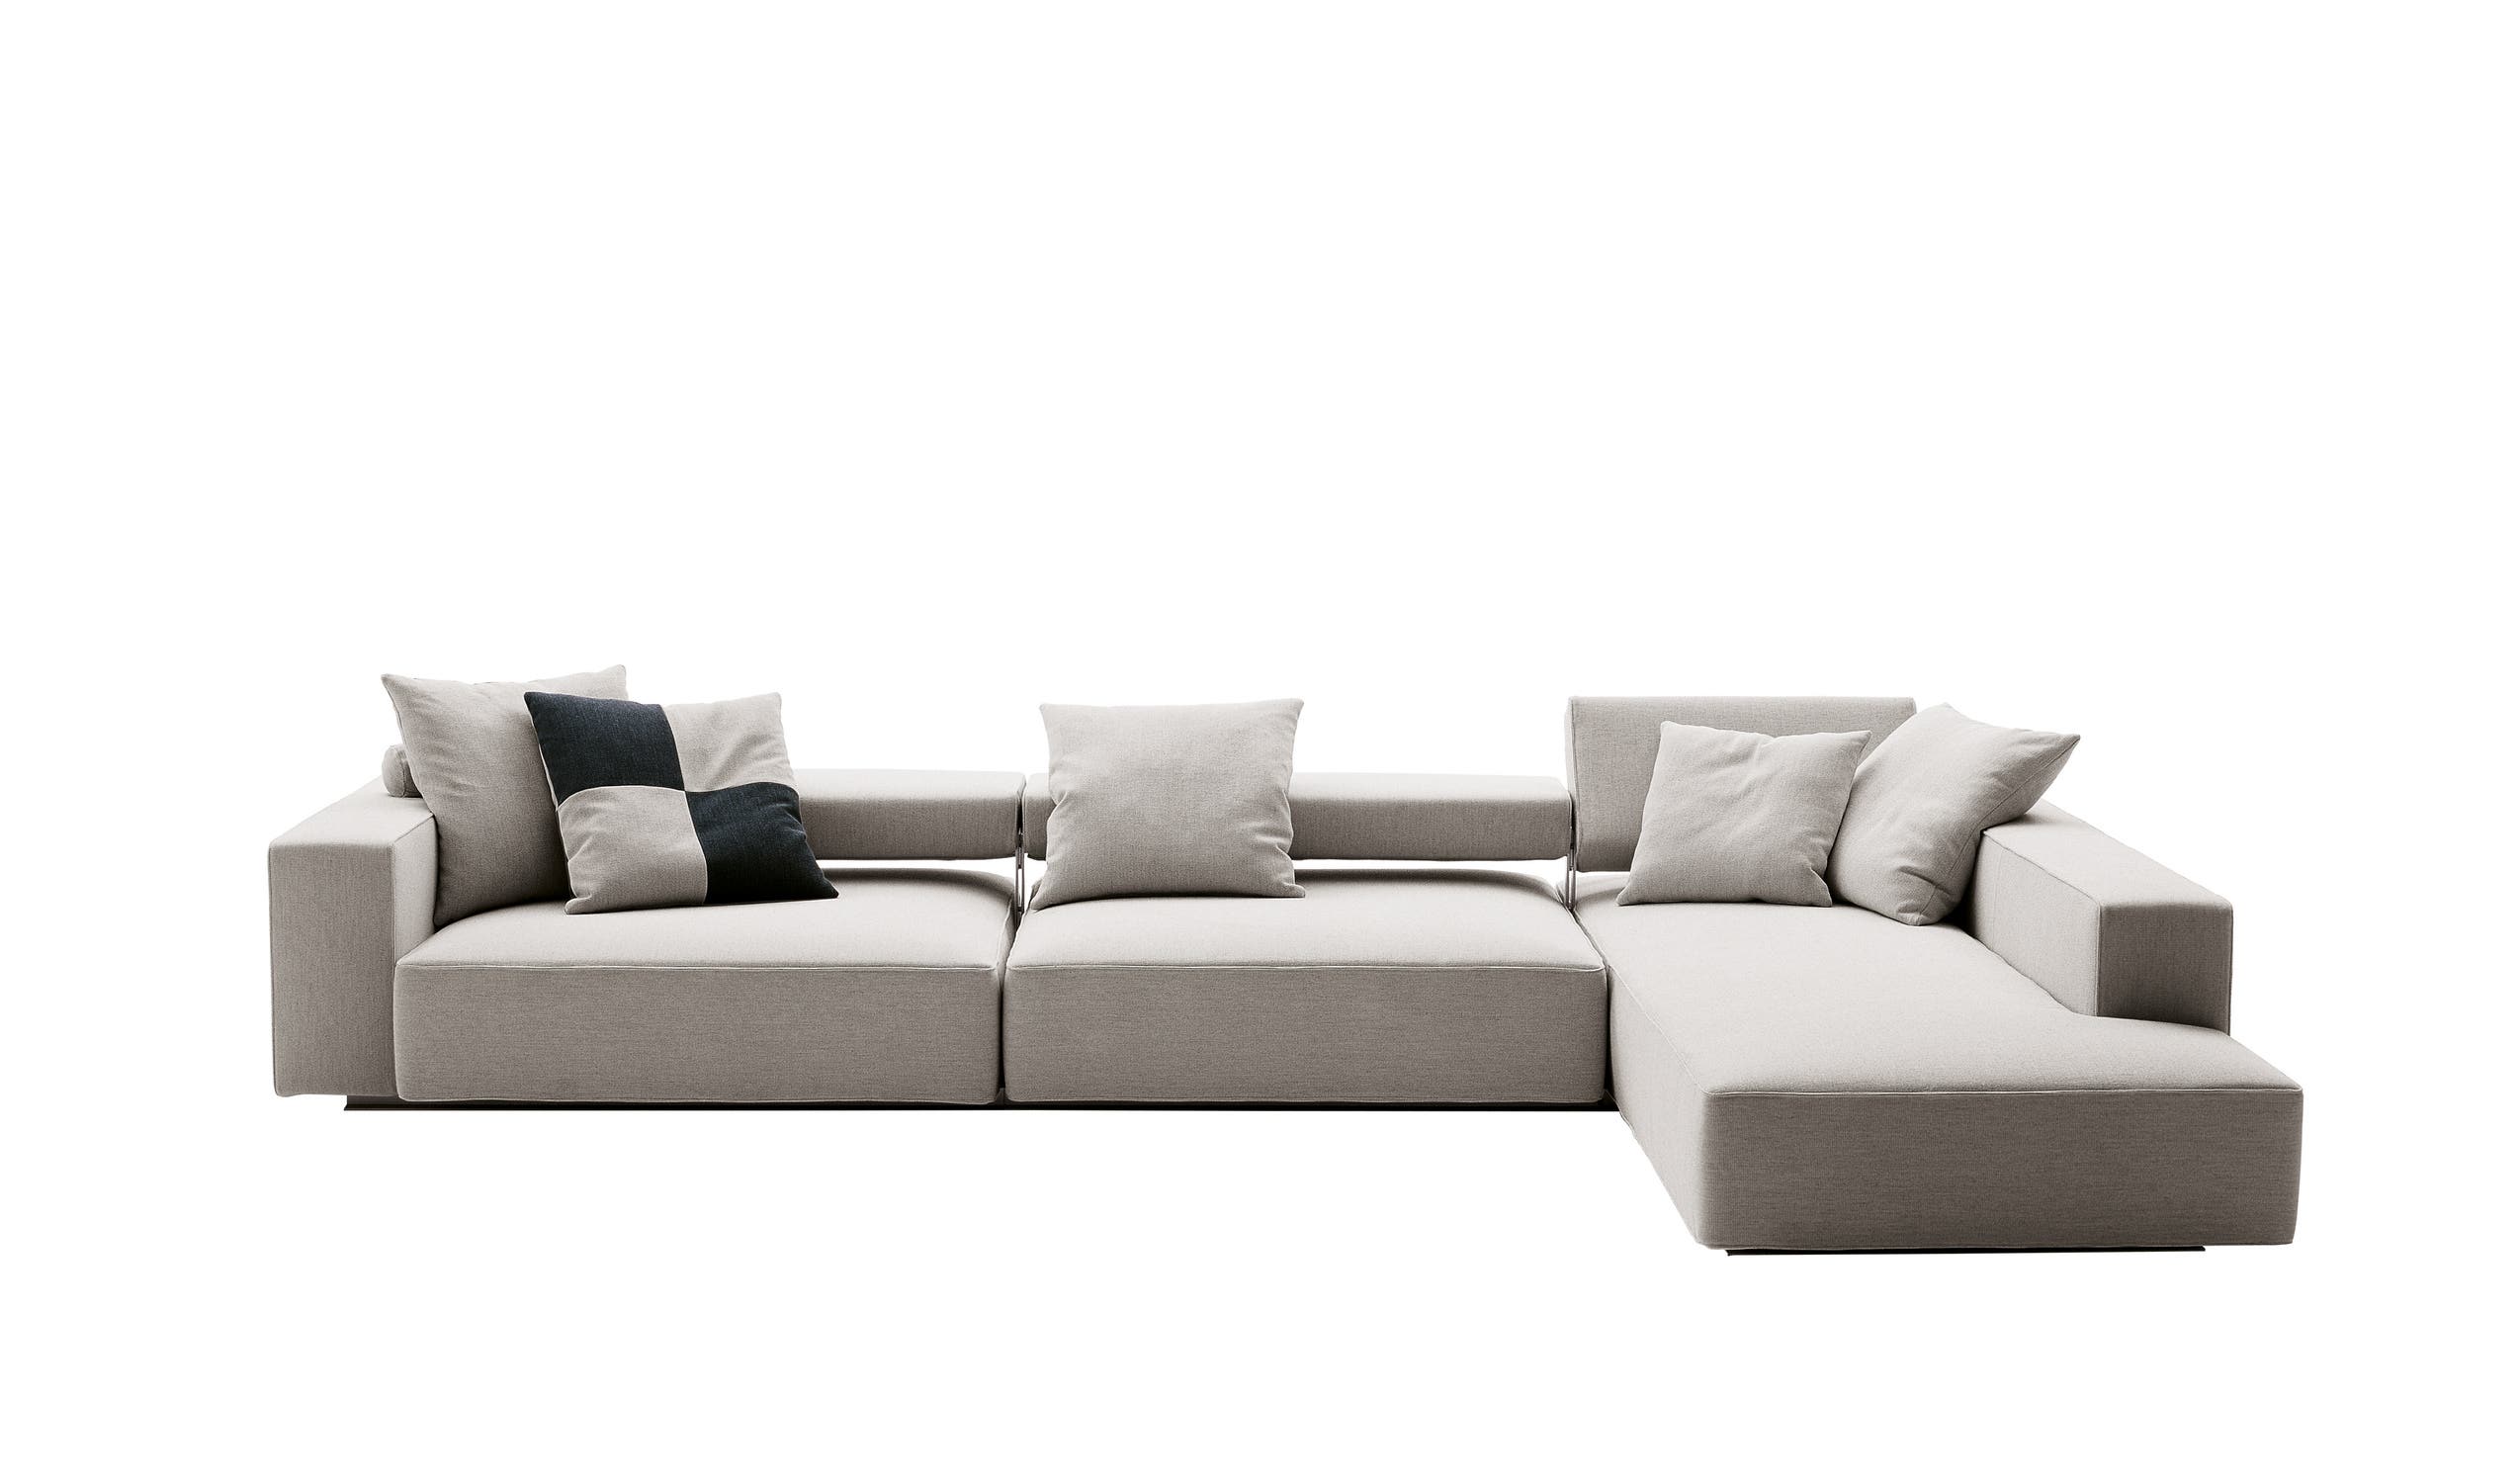 Modern designer italian sofas - Andy '13 Sofas 4